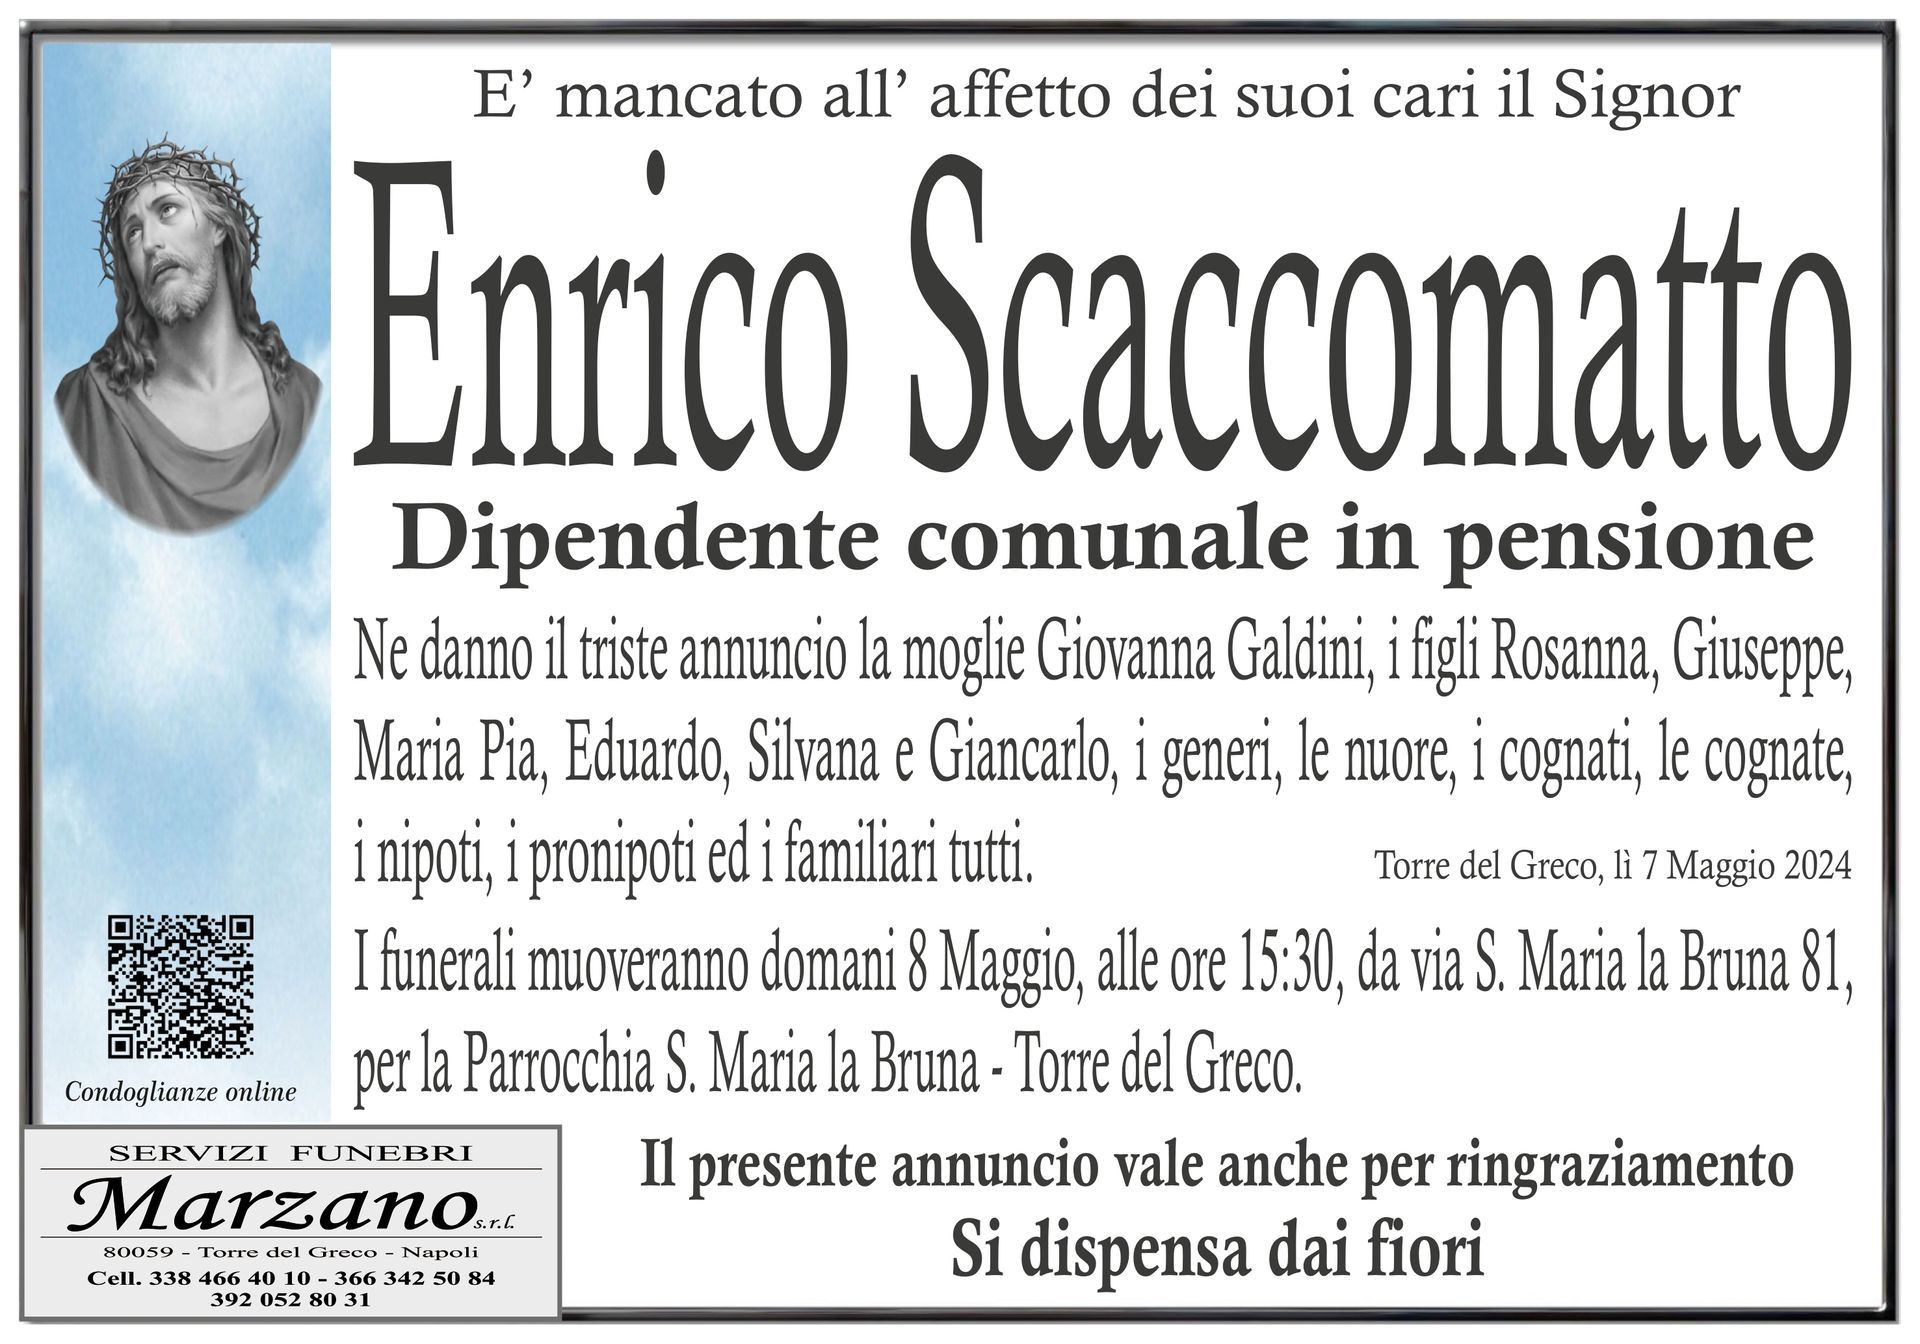 Enrico Scaccomatto